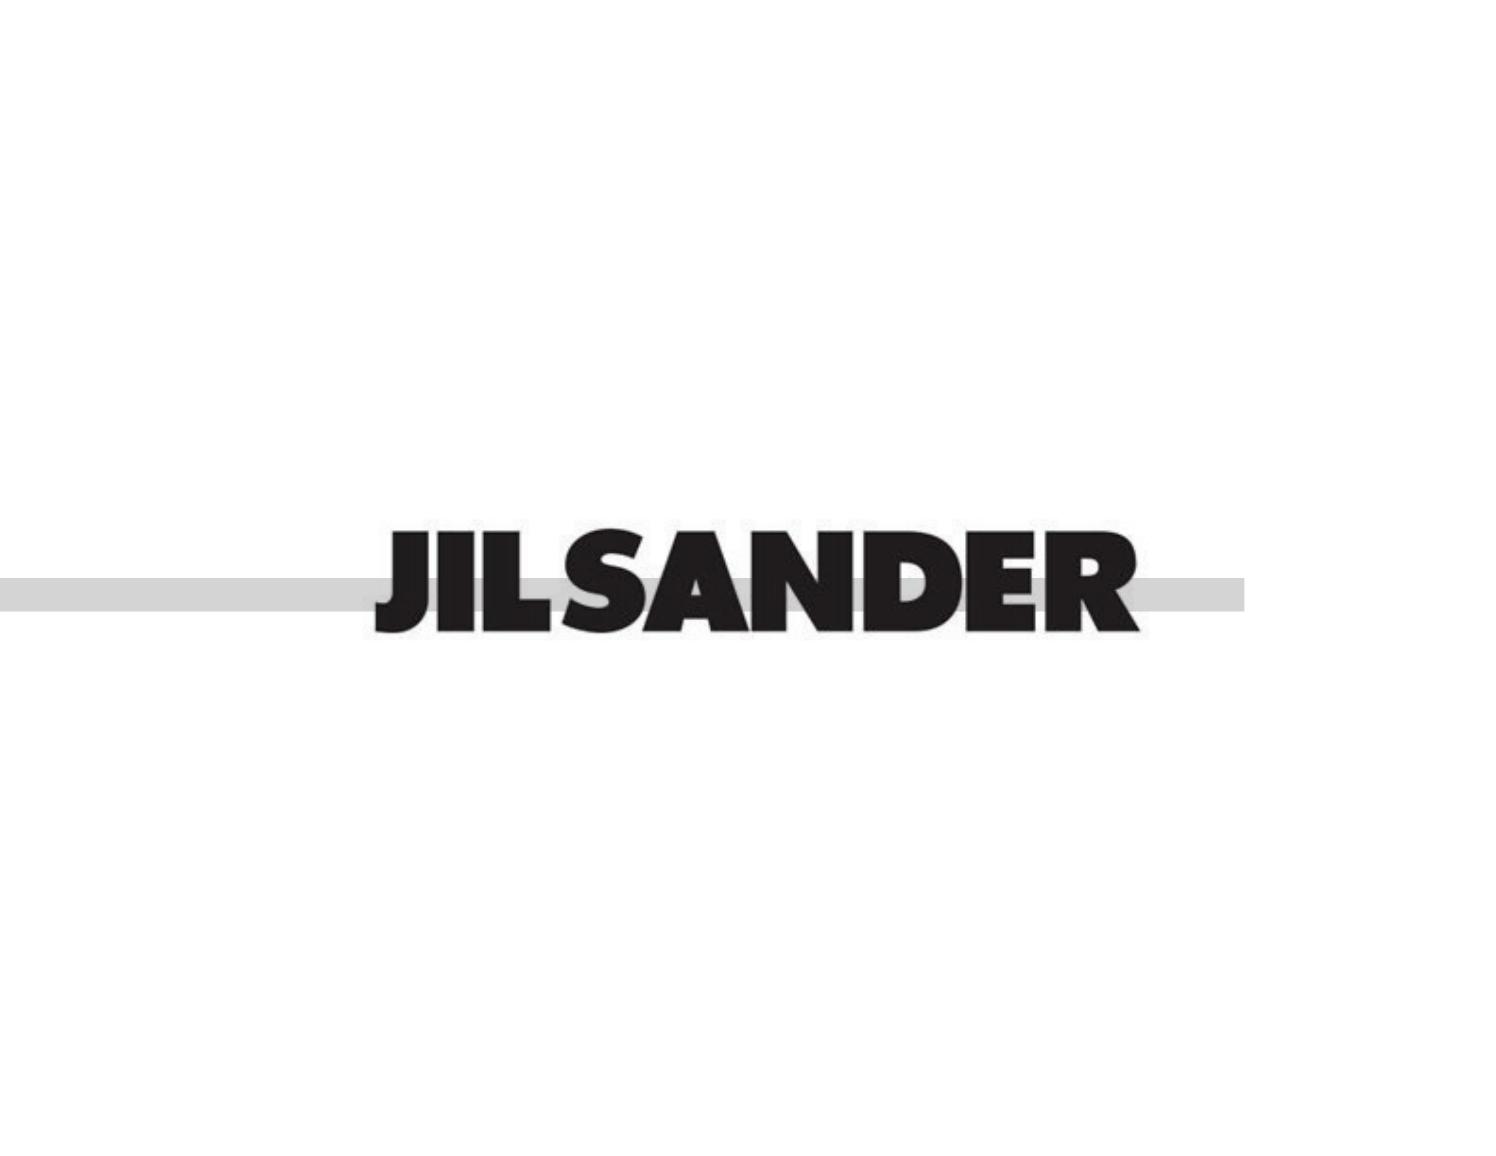 Jil Sander